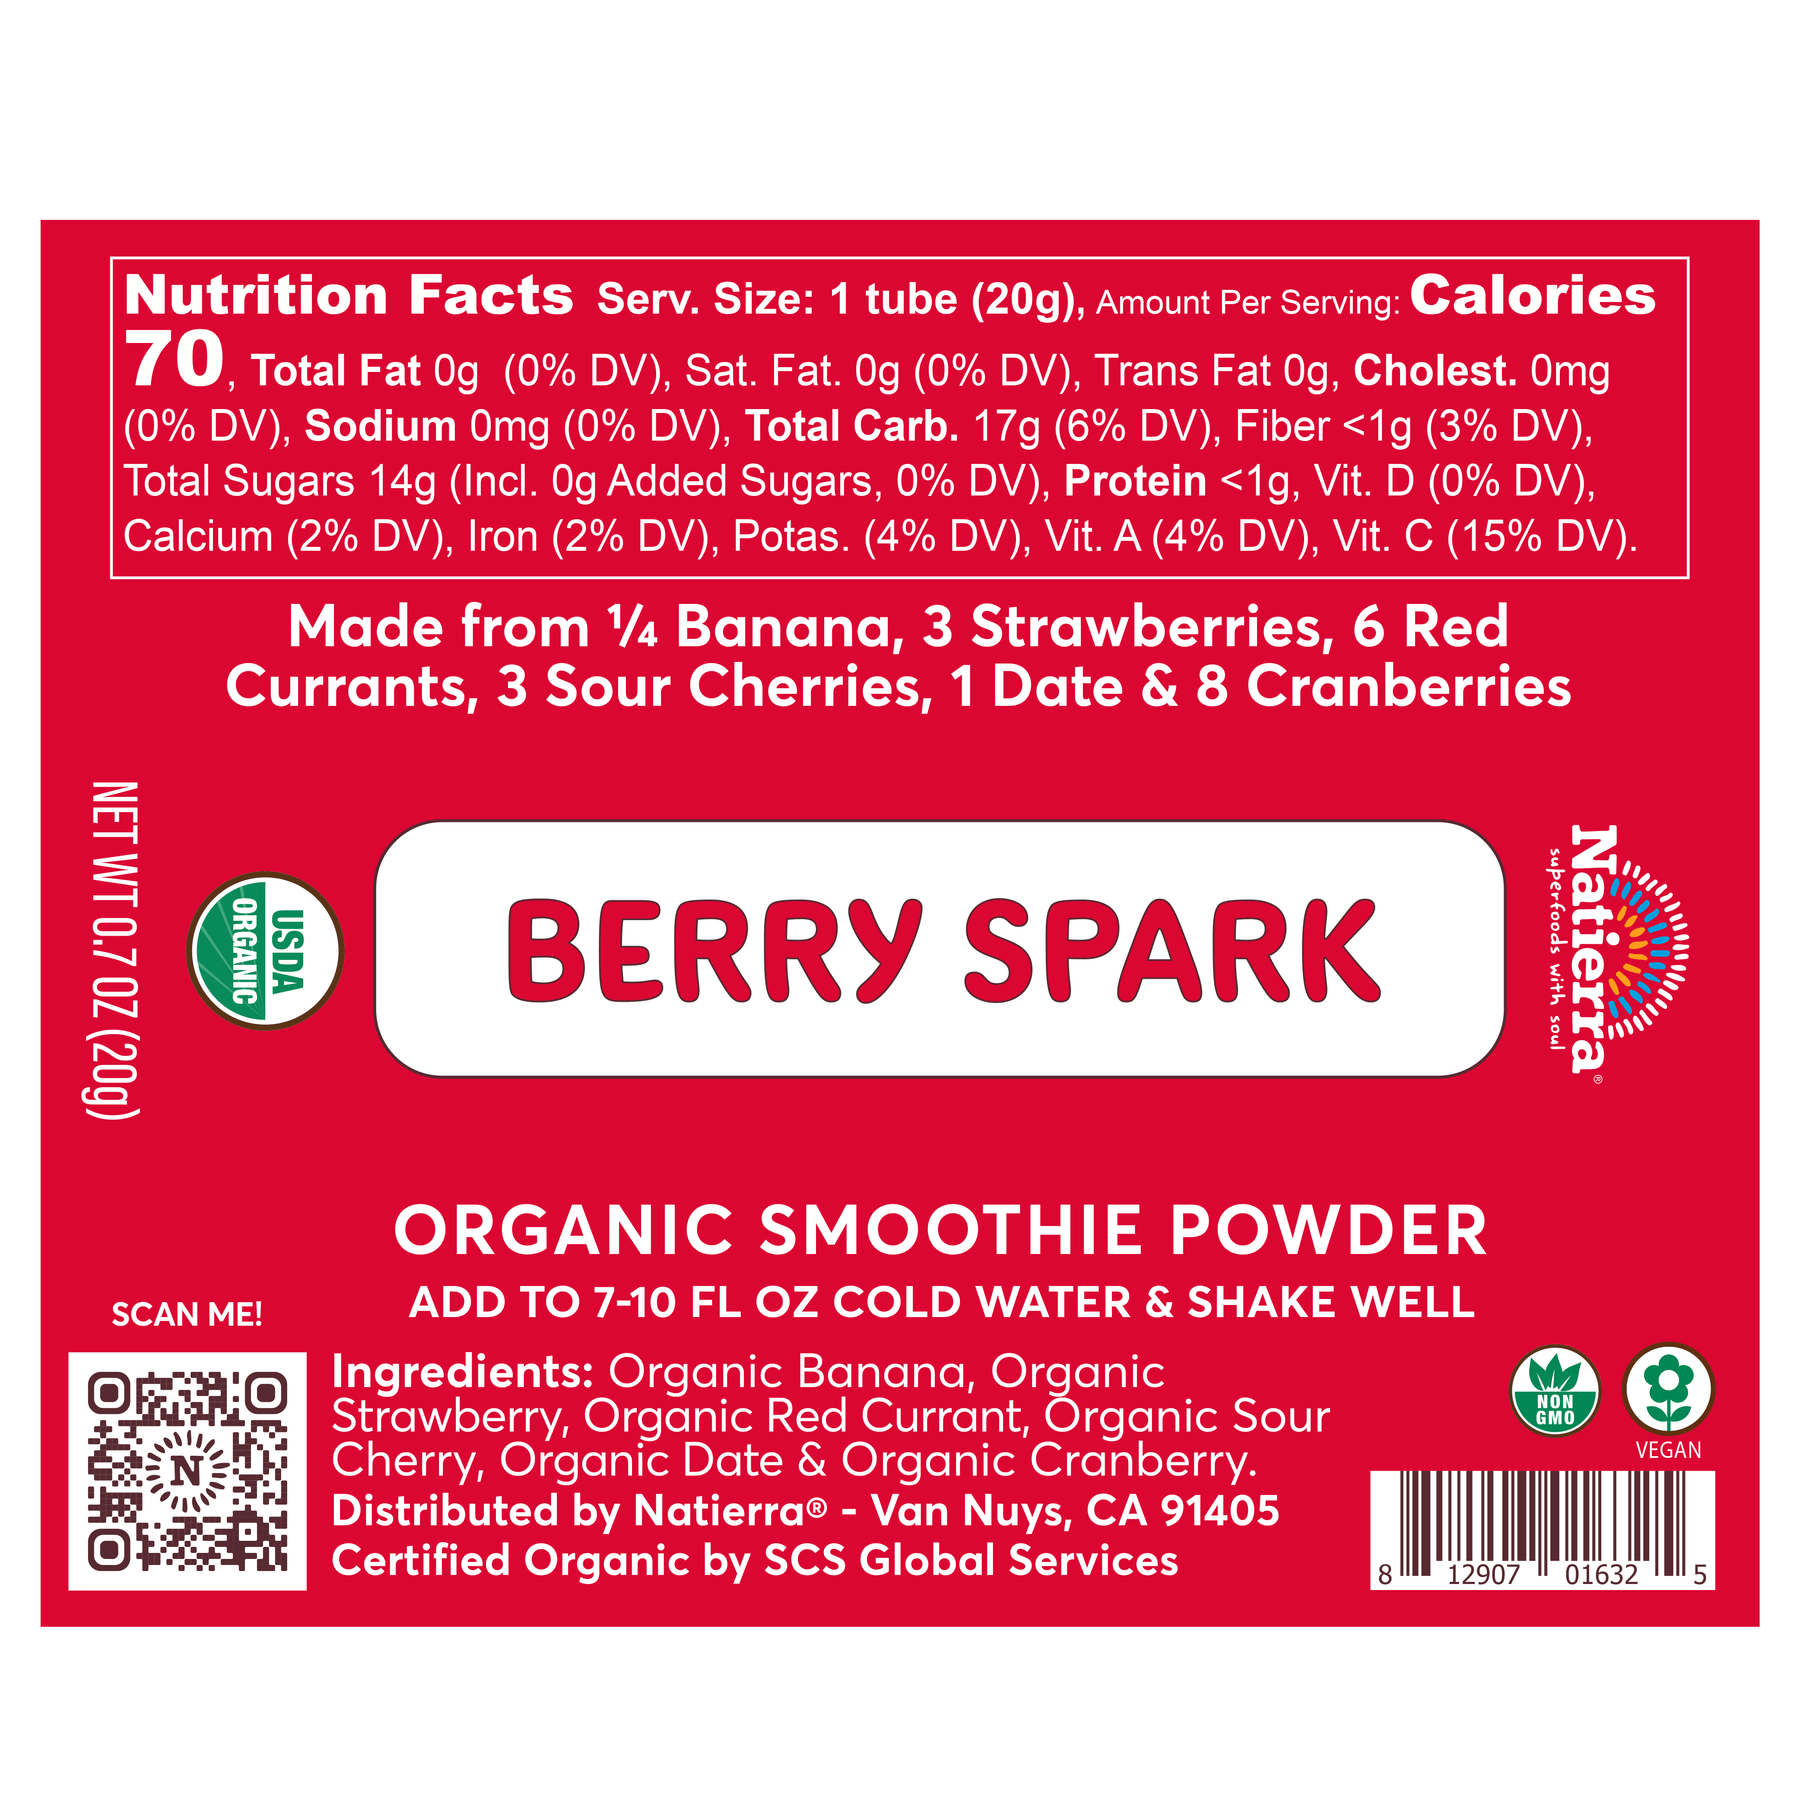 Natierra Berry Spark Smoothie Powder nutrition facts